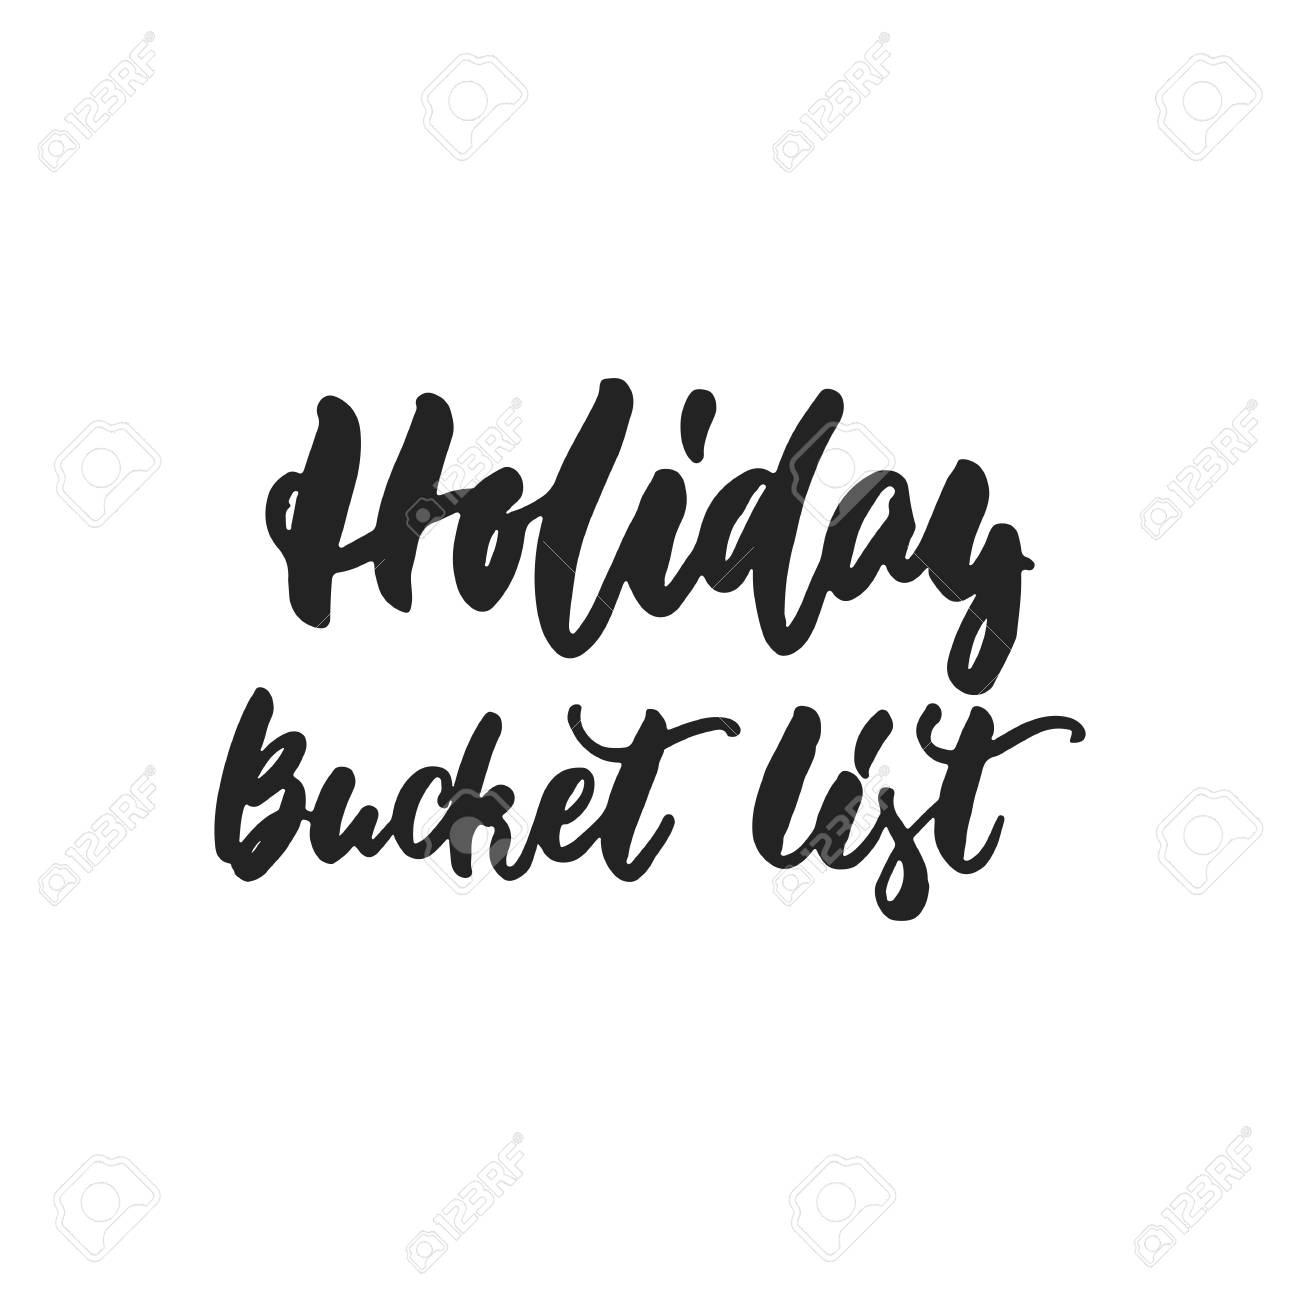 Holiday bucket list.